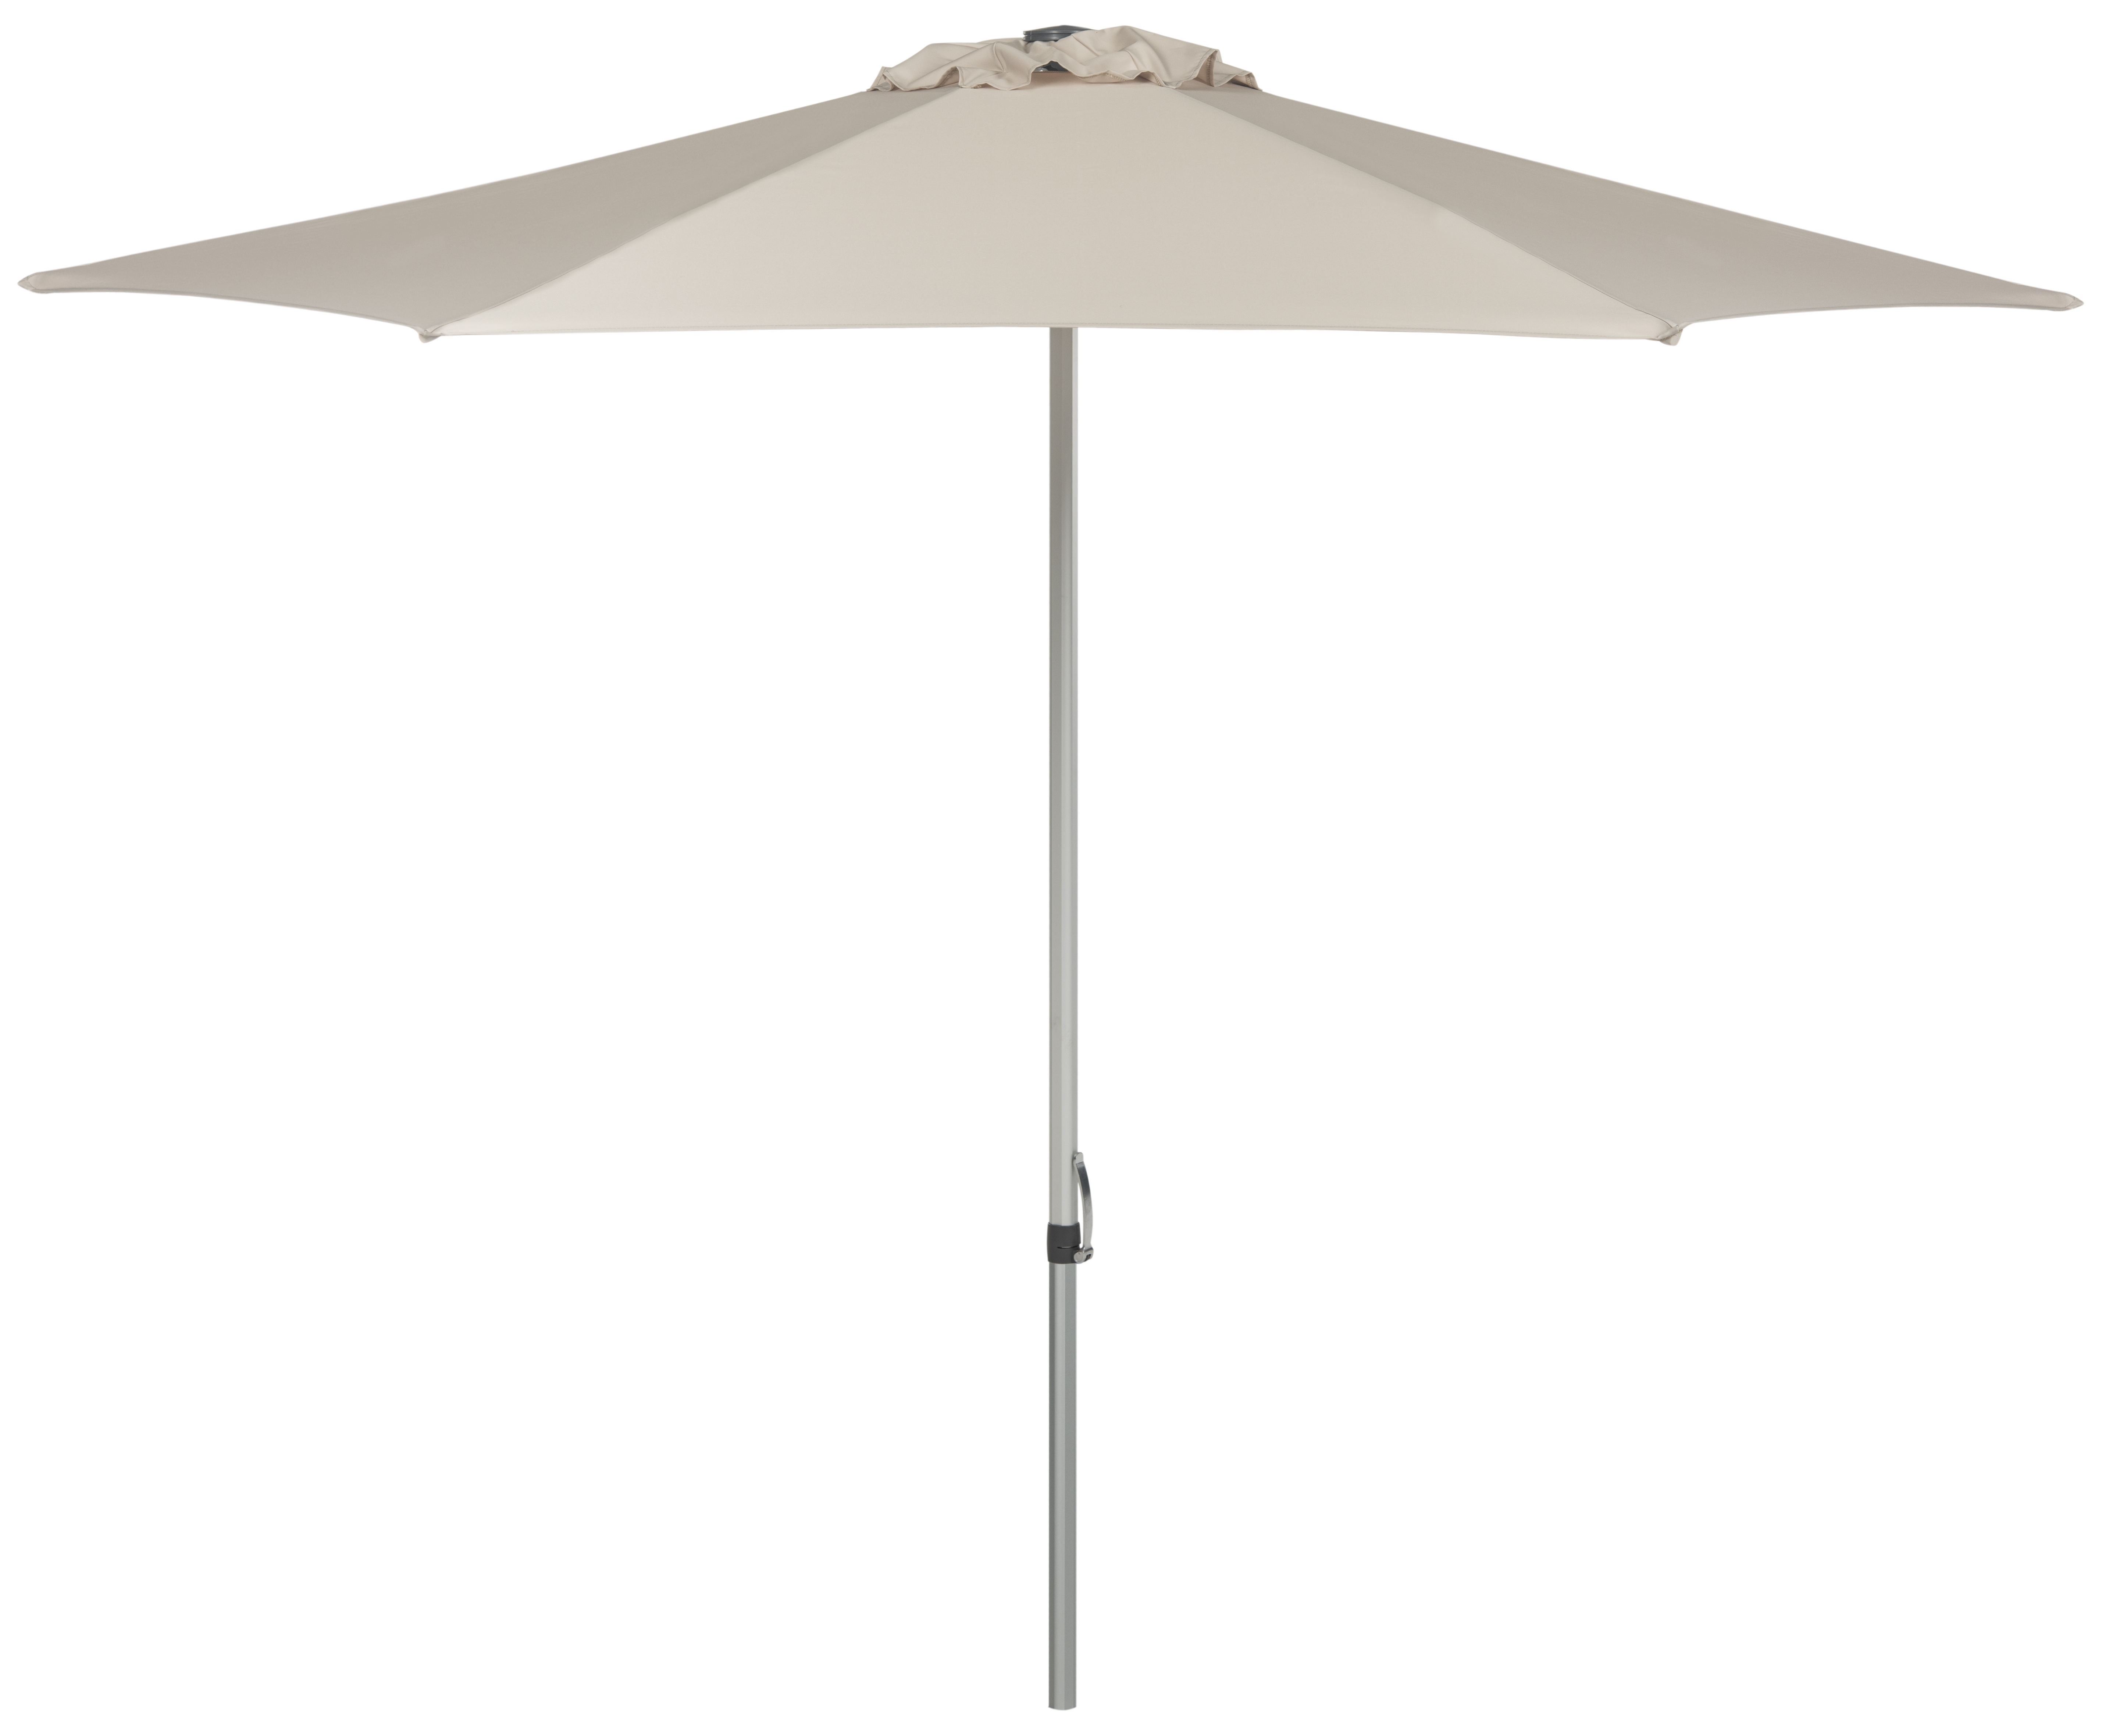 Uv Resistant Hurst 9 Ft Easy Glide Market Umbrella - Beige - Arlo Home - Image 1